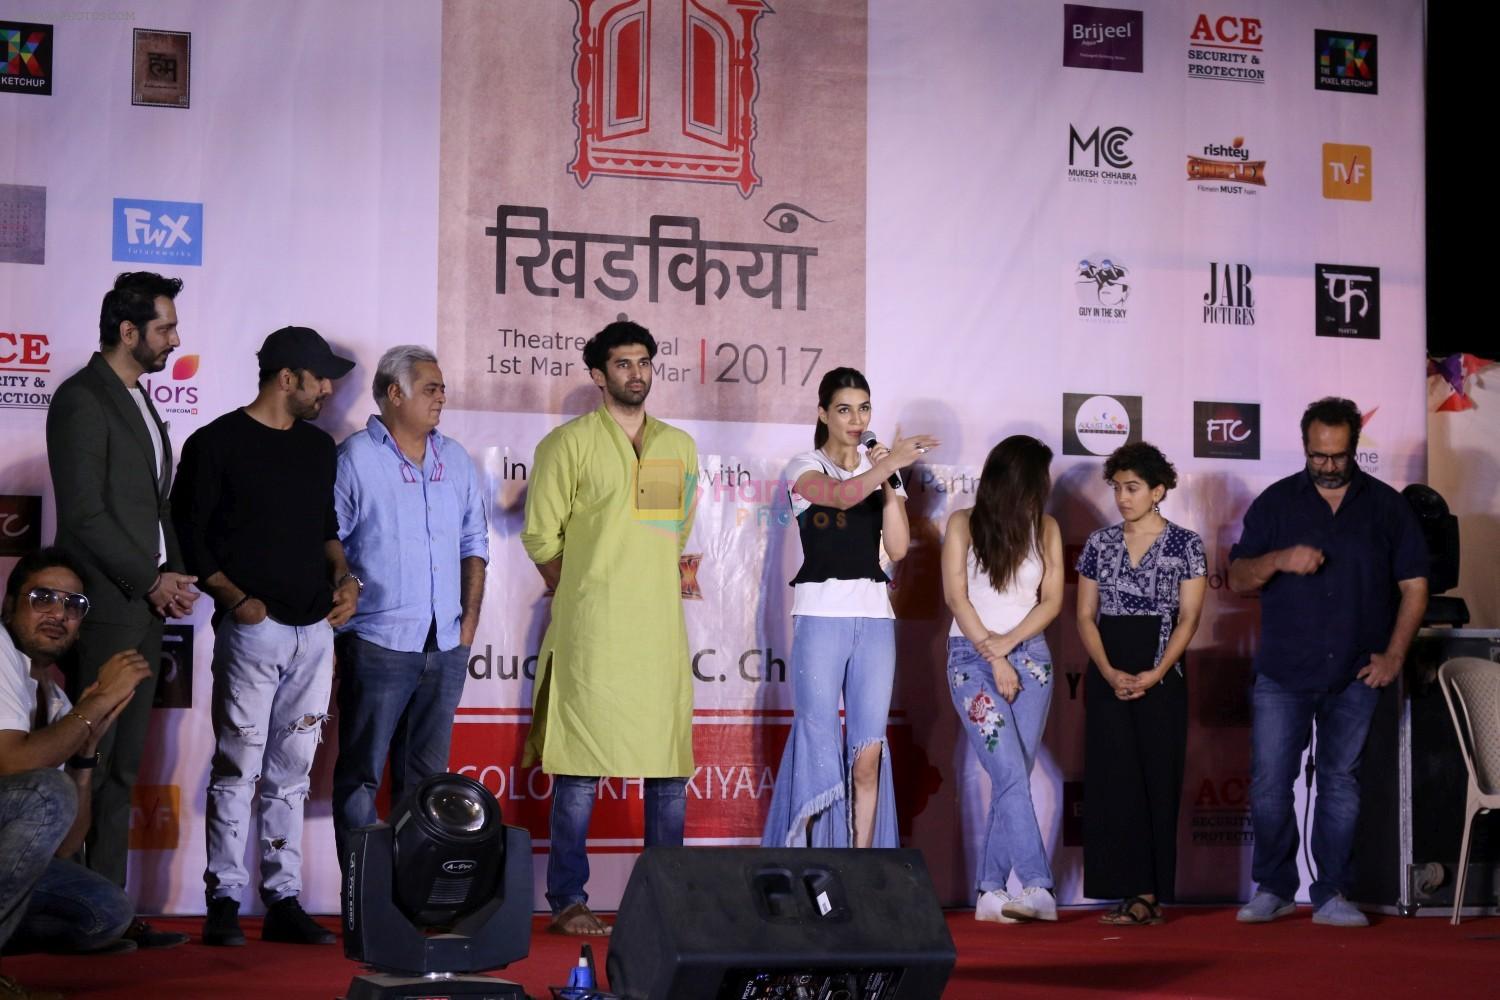 Kriti Sanon, Aditya Roy Kapoor, Ragini Khanna, sanya malhotra, Hansal Mehta, Amit Sadh at The Second Edition Of Colours Khidkiyaan Theatre Festival in _'sathaye College on 4th March 2017